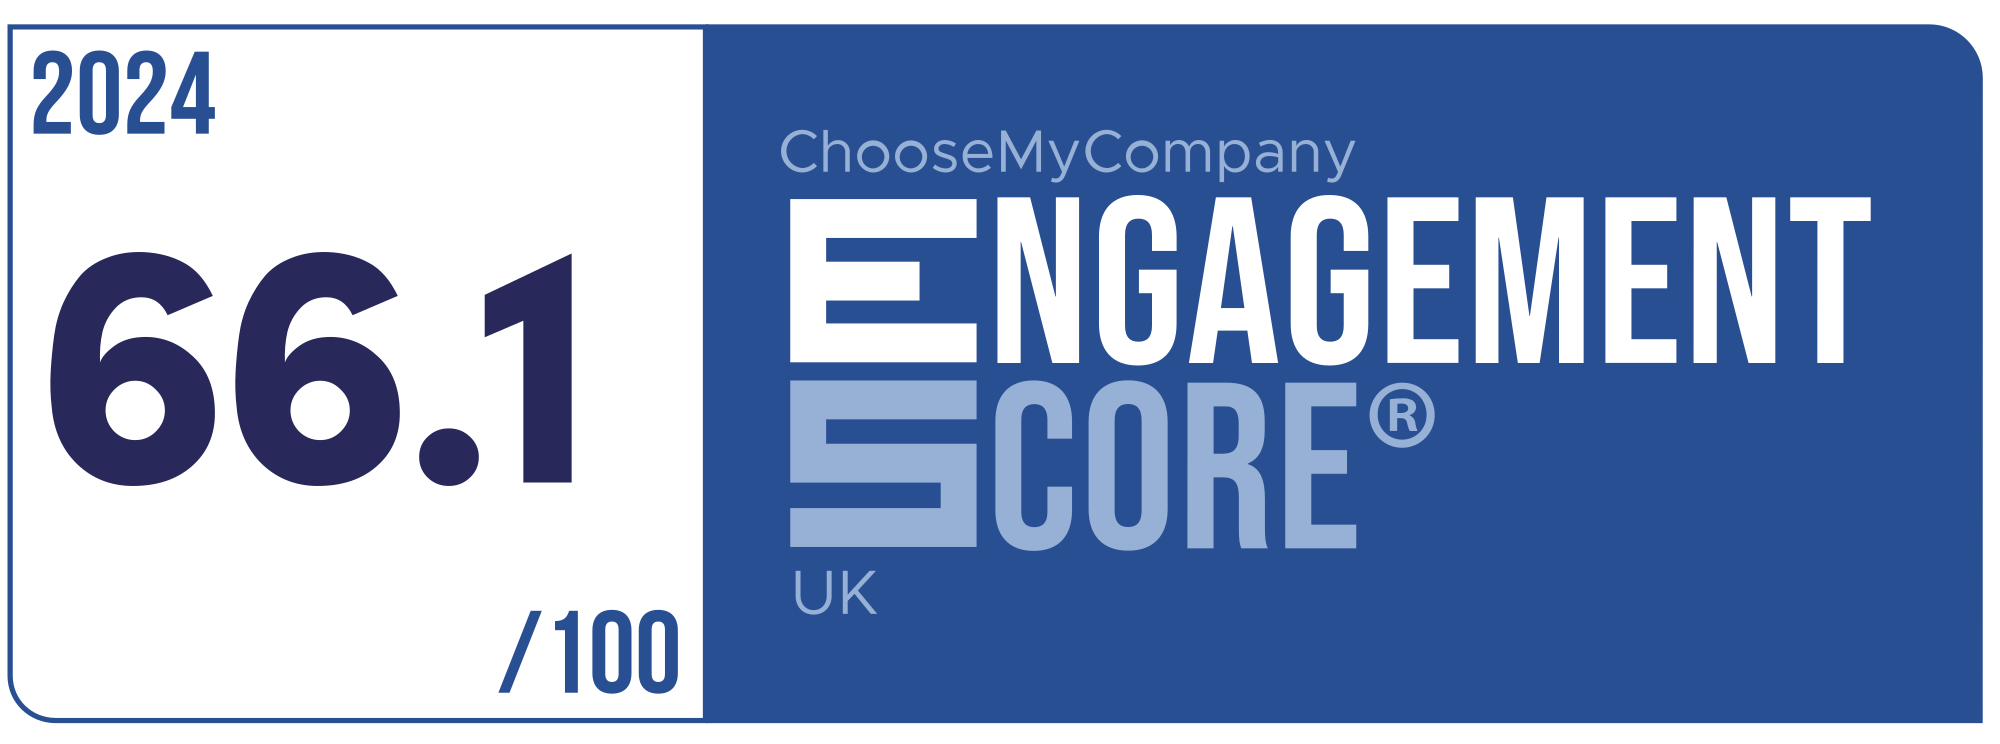 Label Engagement Score 2024 UK